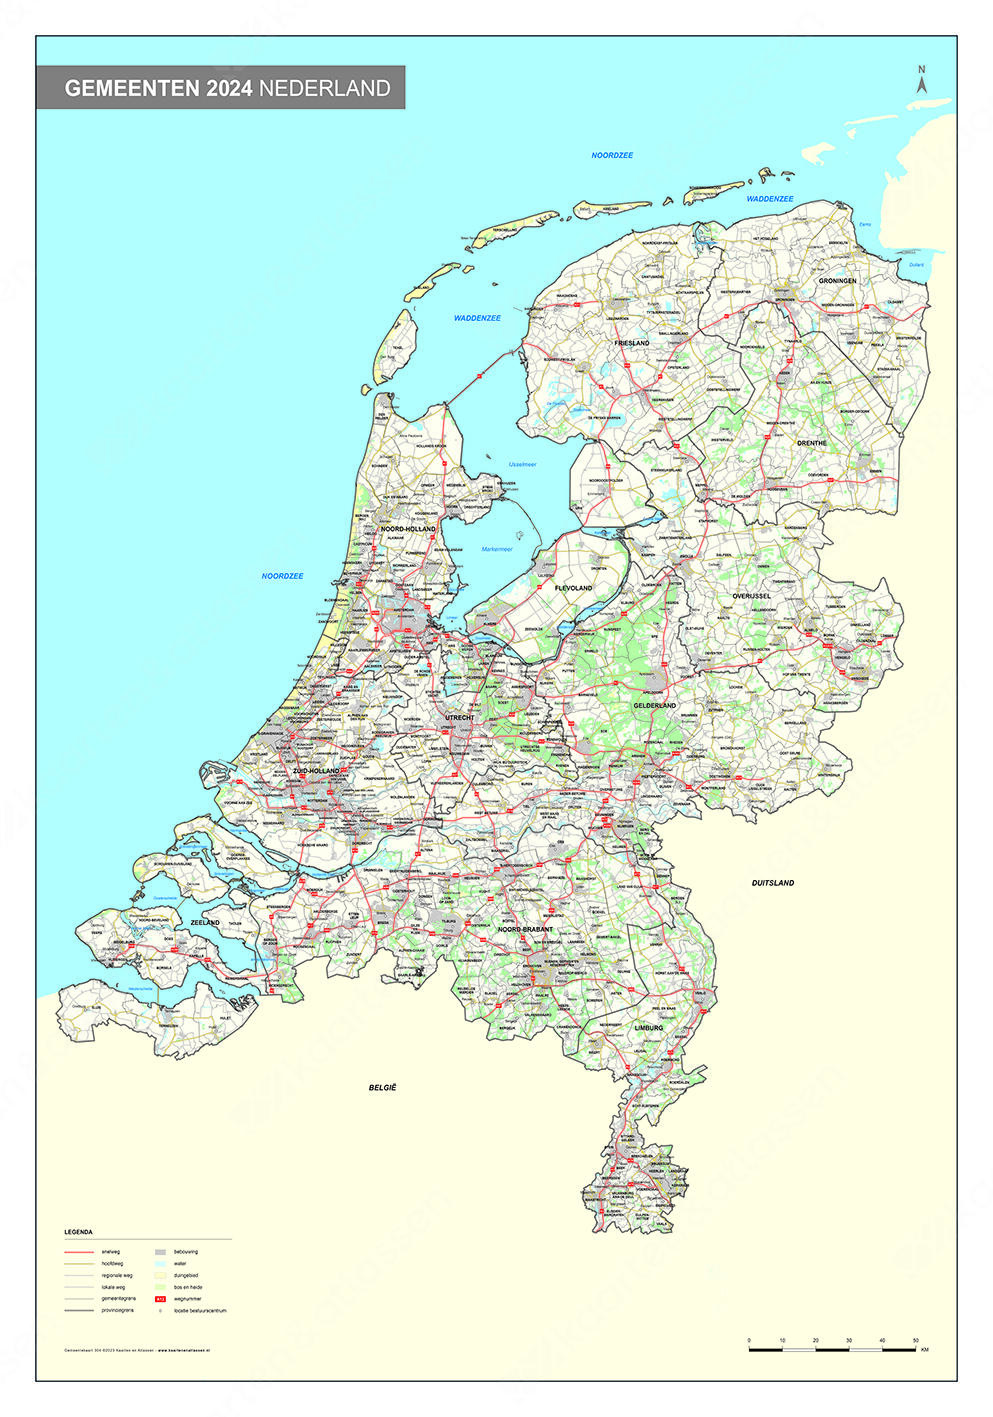 Gemeentekaart Nederland Gedetailleerd